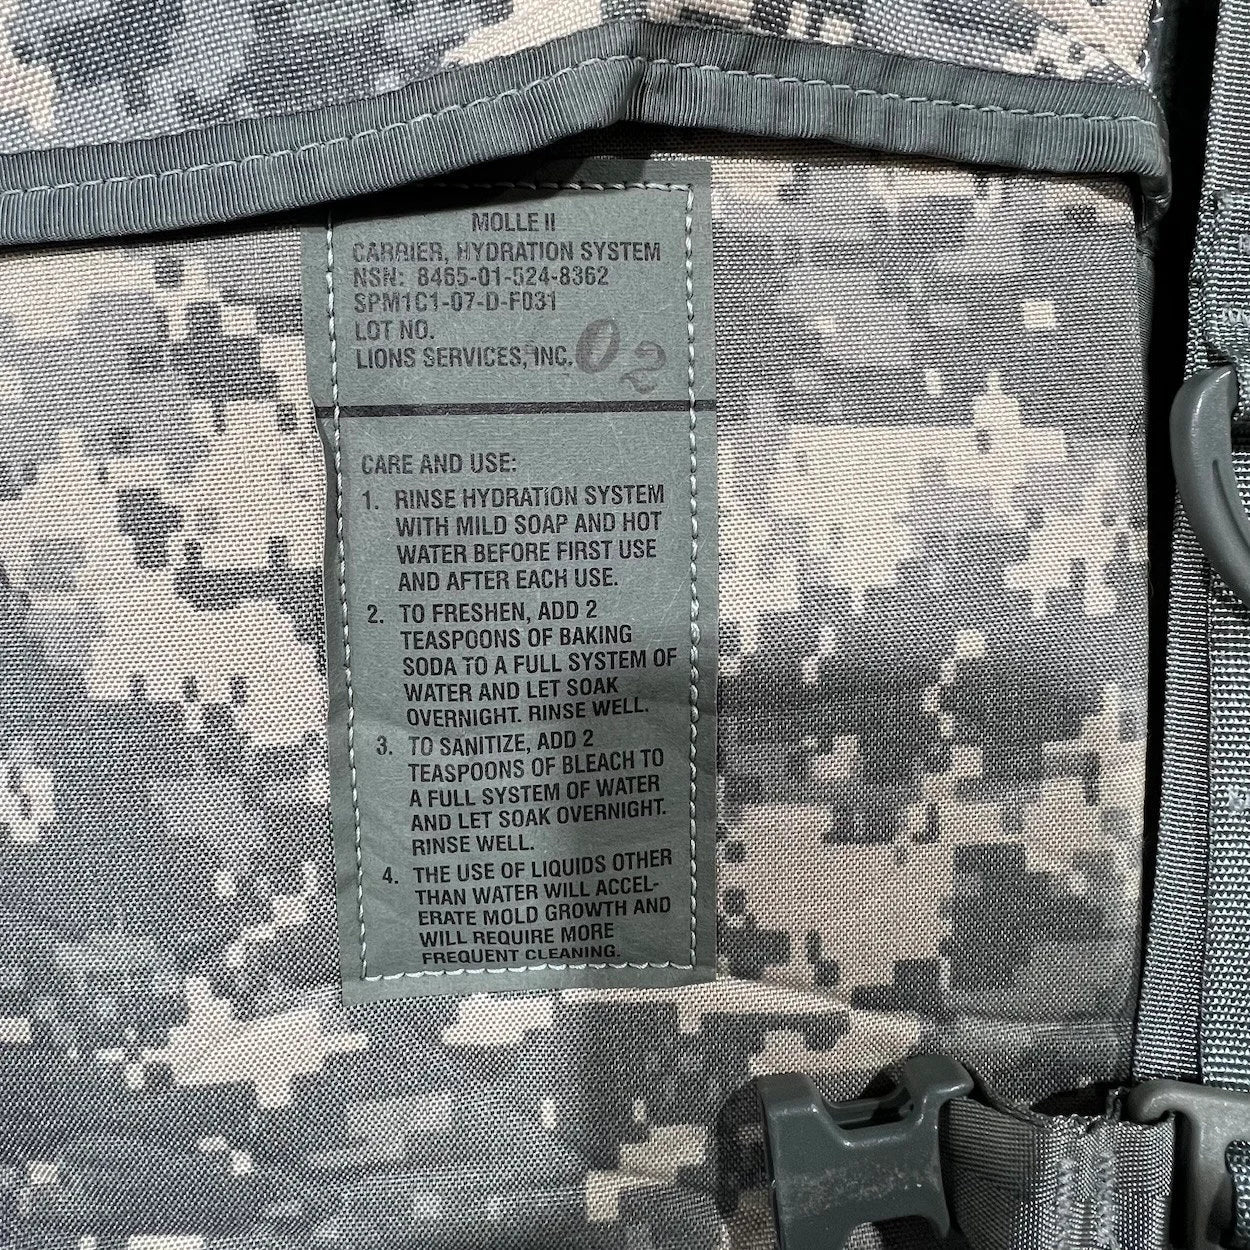 U.S. Military Hydration Carrier In ACU Digital Camo MOLLE II